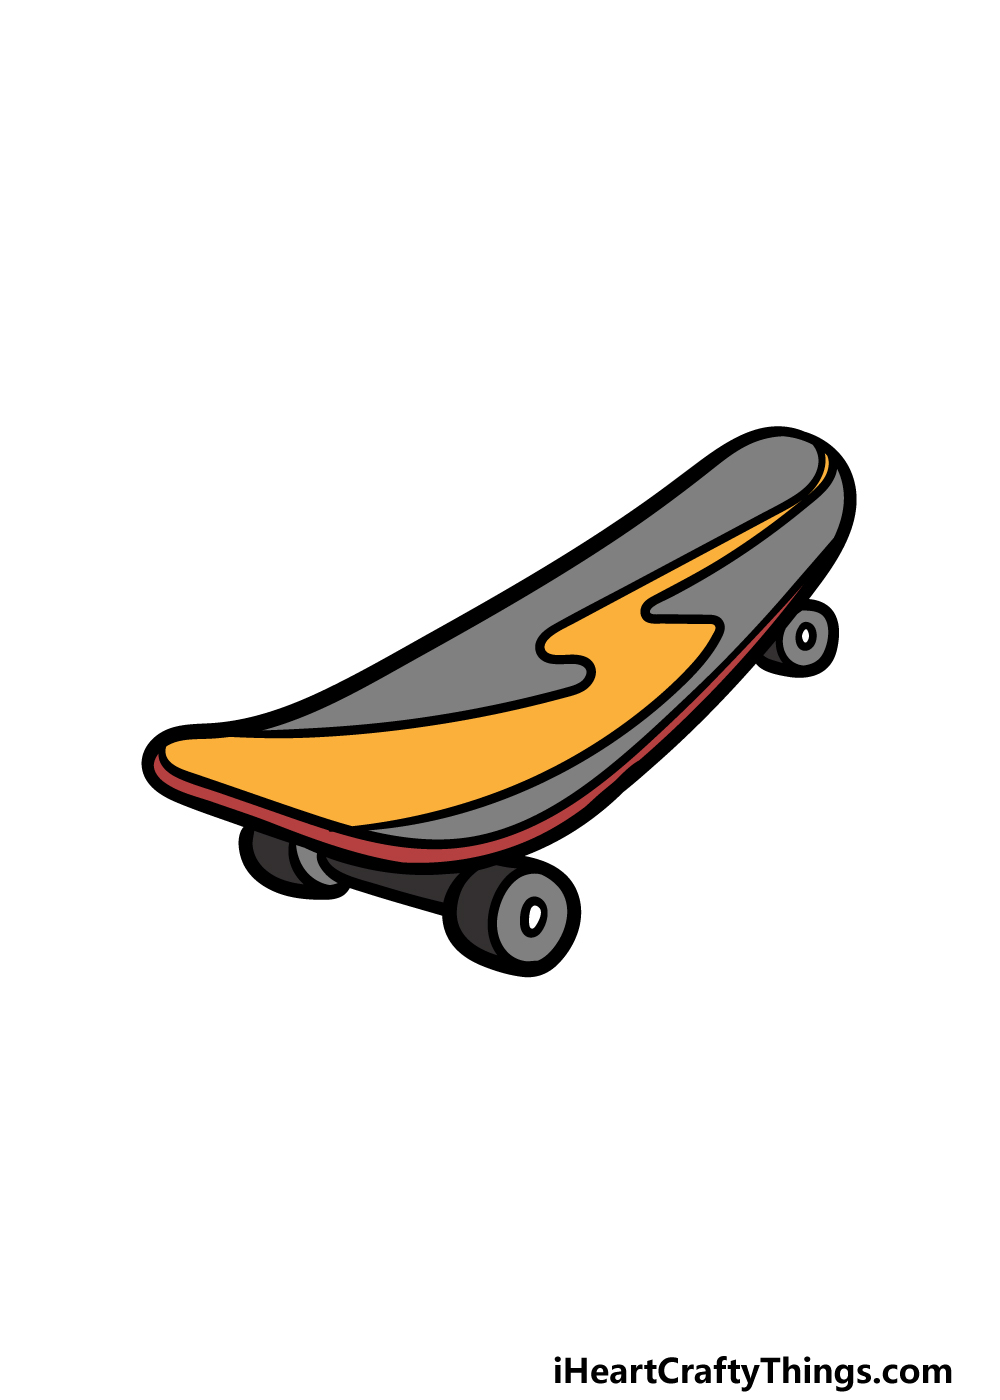 Cartoon Skateboard Drawing - How To Draw A Cartoon Skateboard Step By Step